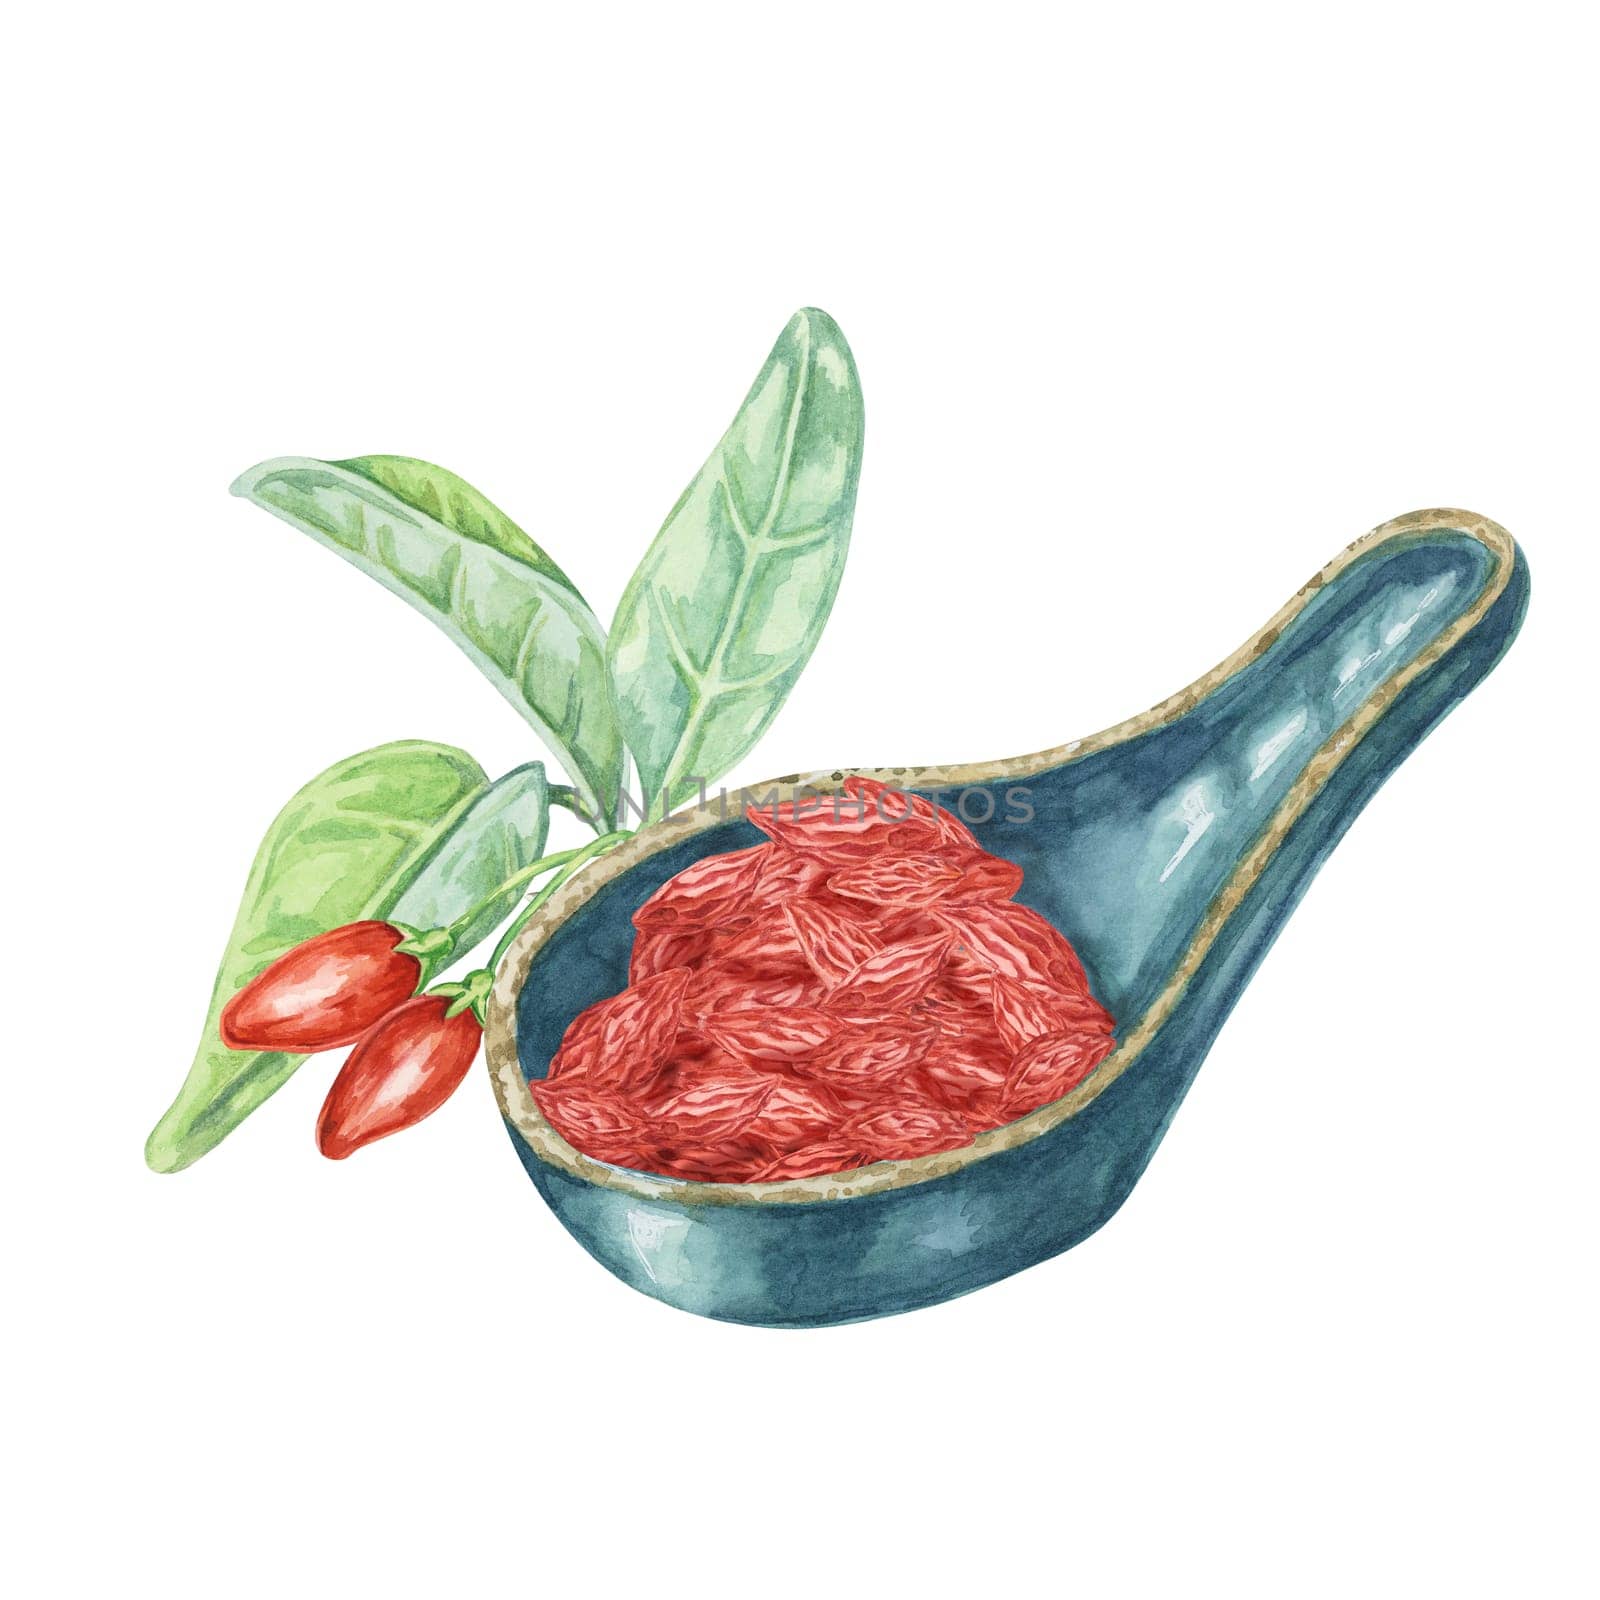 Dry goji in a ceramic spoon by Fofito